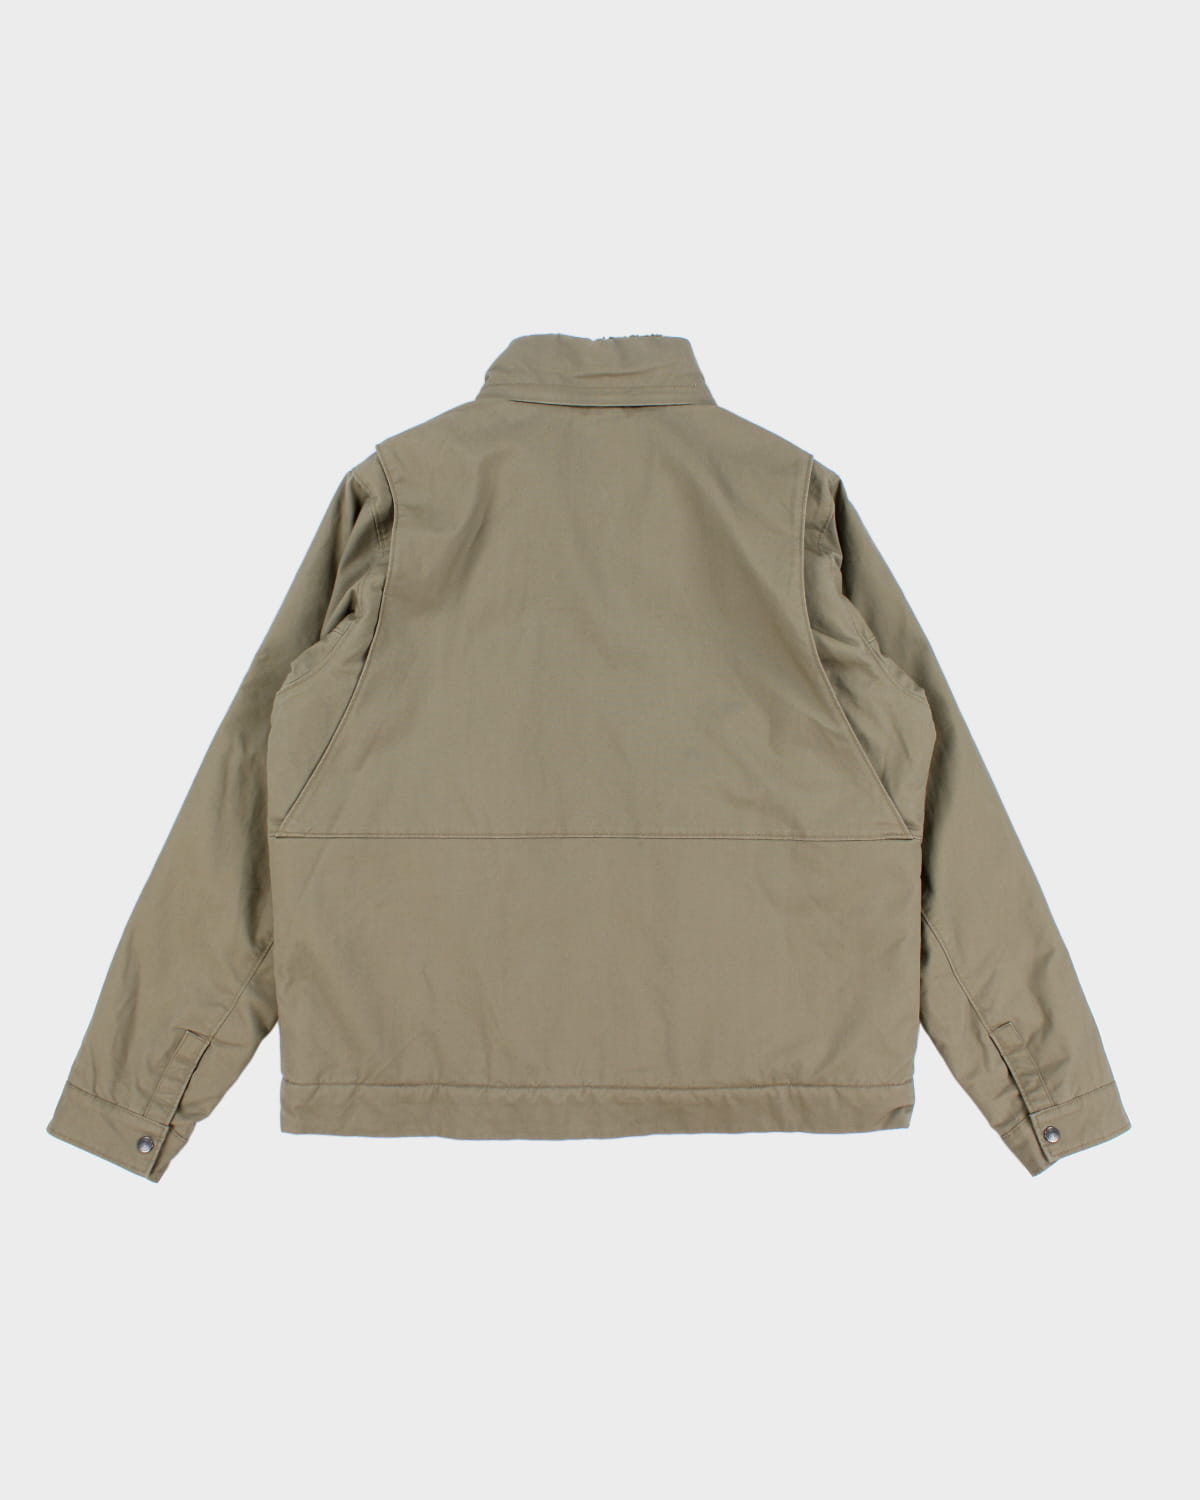 Patagonia Fleece Lined Jacket - XL